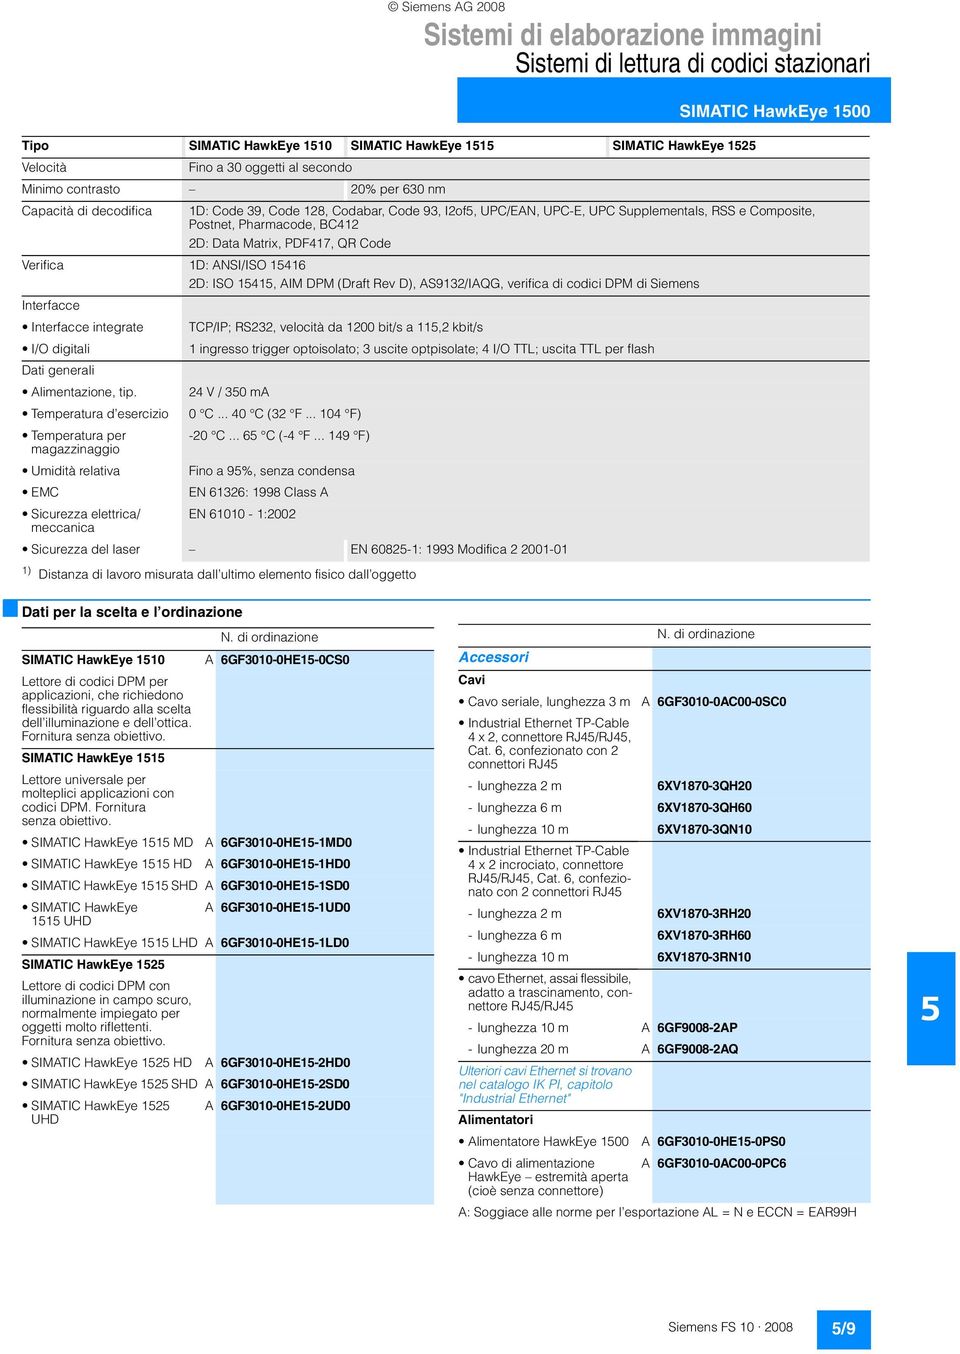 Postnet, Pharmacode, BC412 2D: Data Matrix, PDF417, QR Code Verifica 1D: ANSI/ISO 1416 2D: ISO 141, AIM DPM (Draft Rev D), AS9132/IAQG, verifica di codici DPM di Siemens Interfacce Interfacce